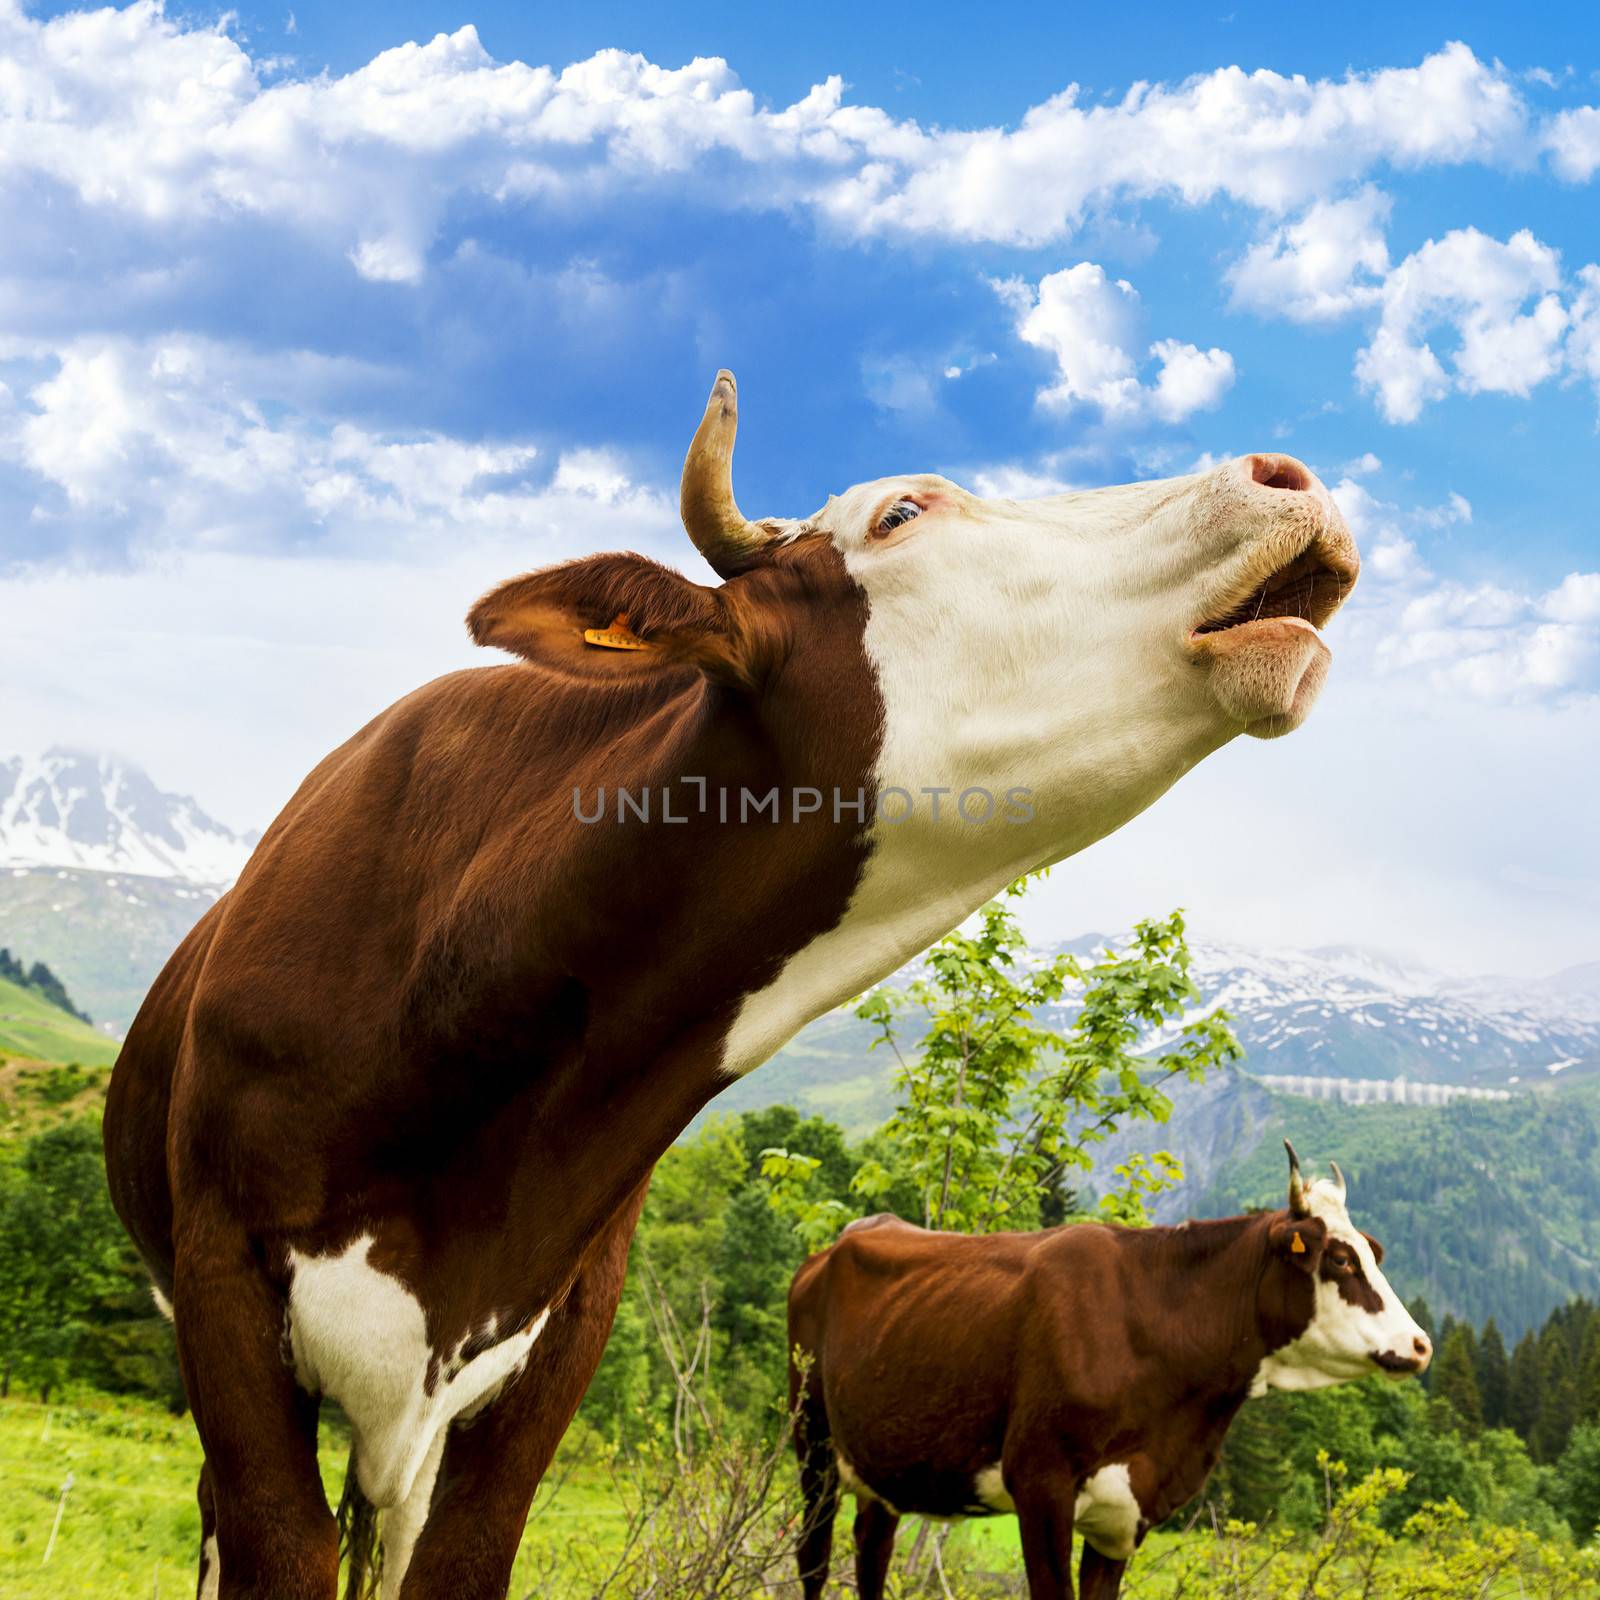 Alpine cow by ventdusud